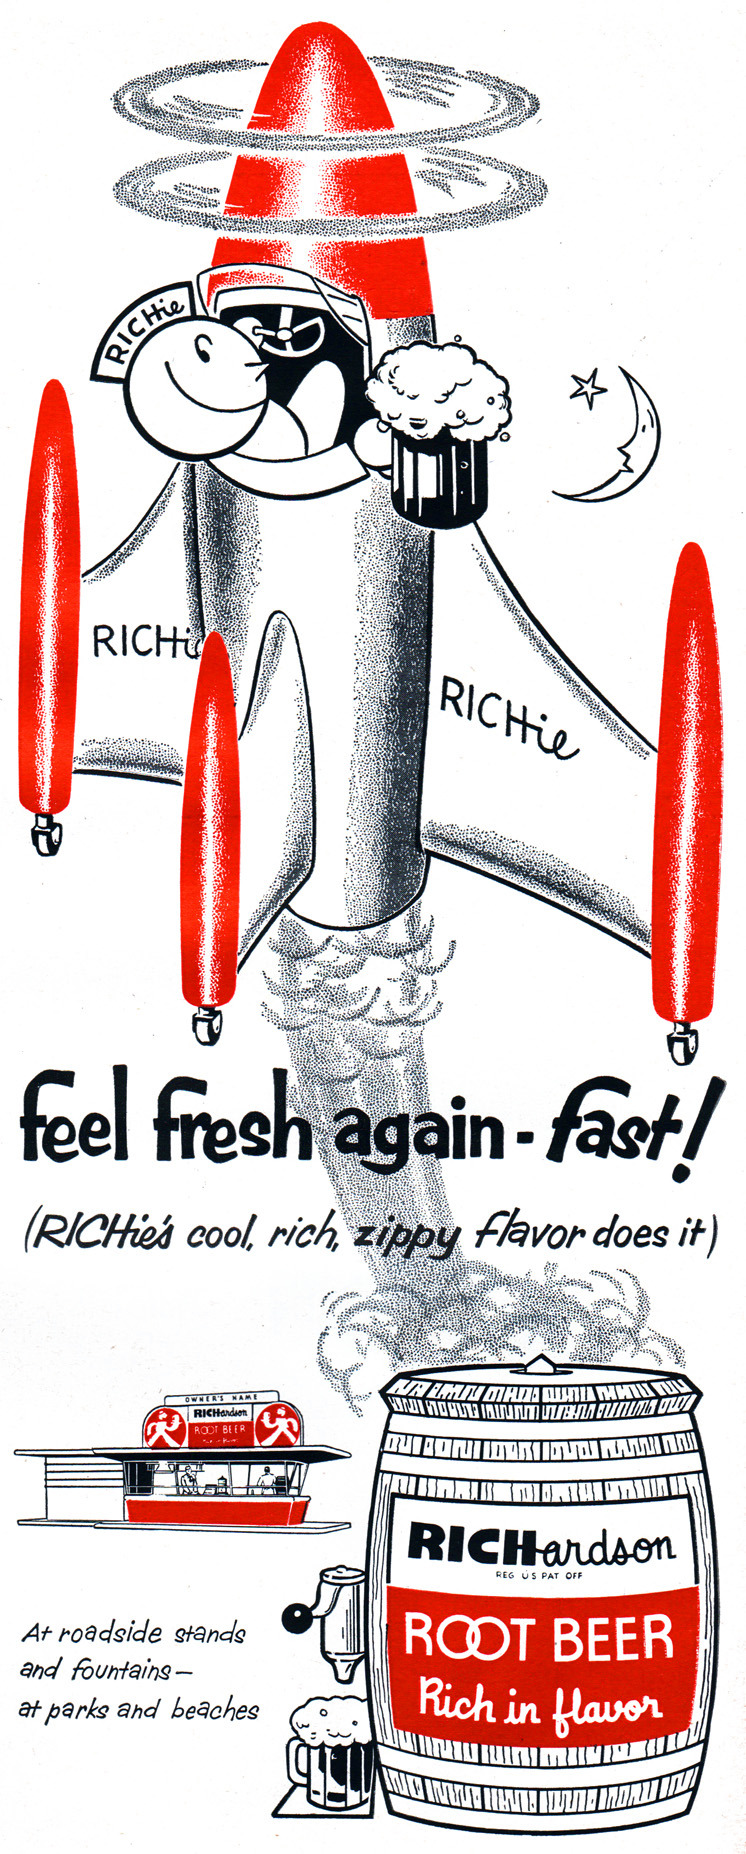 Richardson Root Beer - 1954